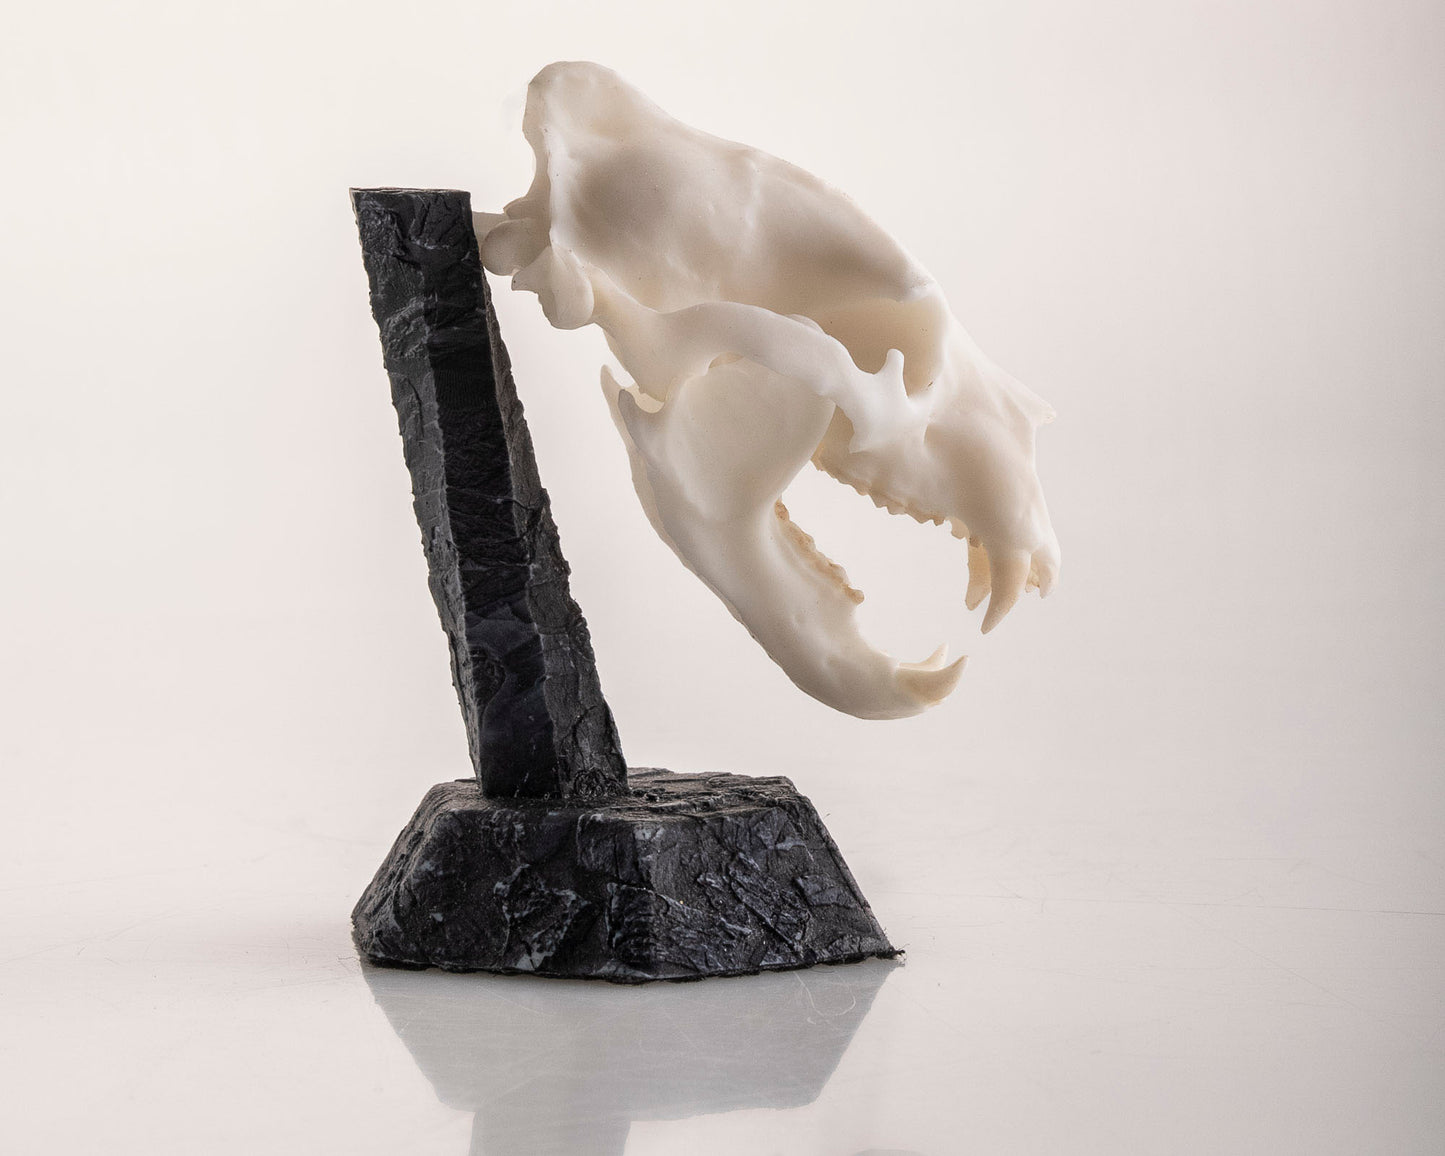 Skullies - Resin - Miniature Replica Lion Skull